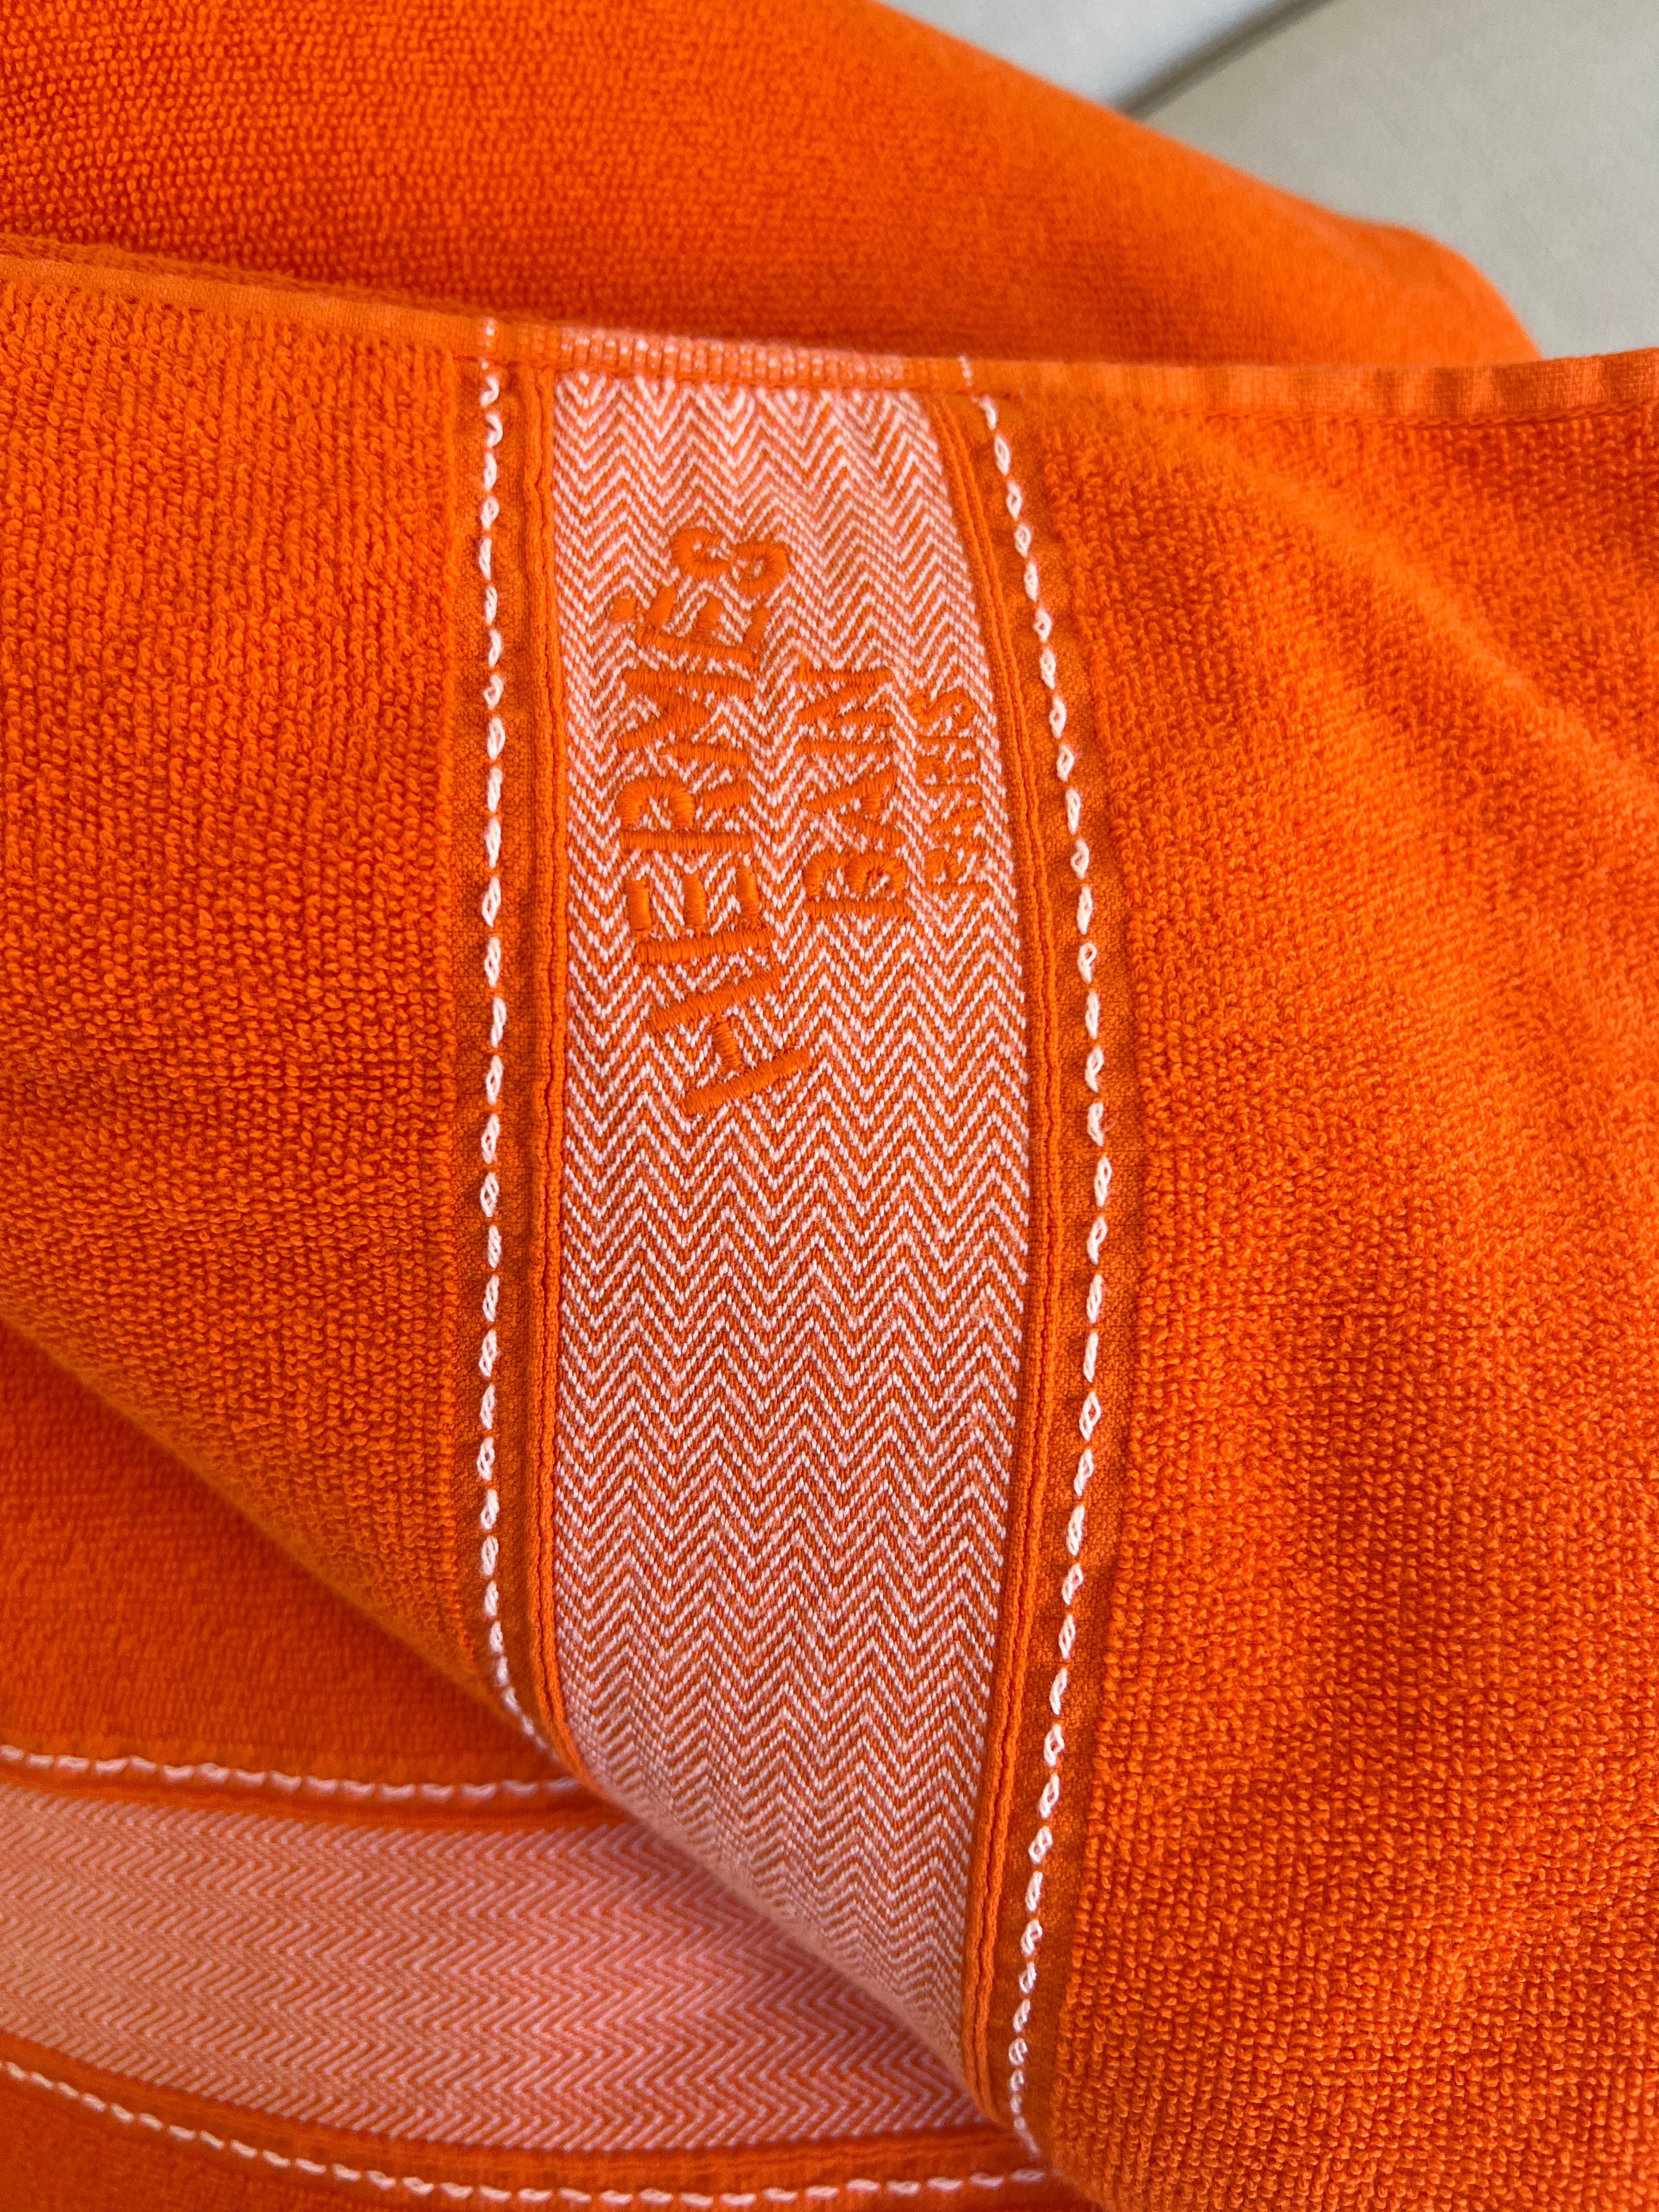 LuxuryPromise Hermes yacht towel orange large